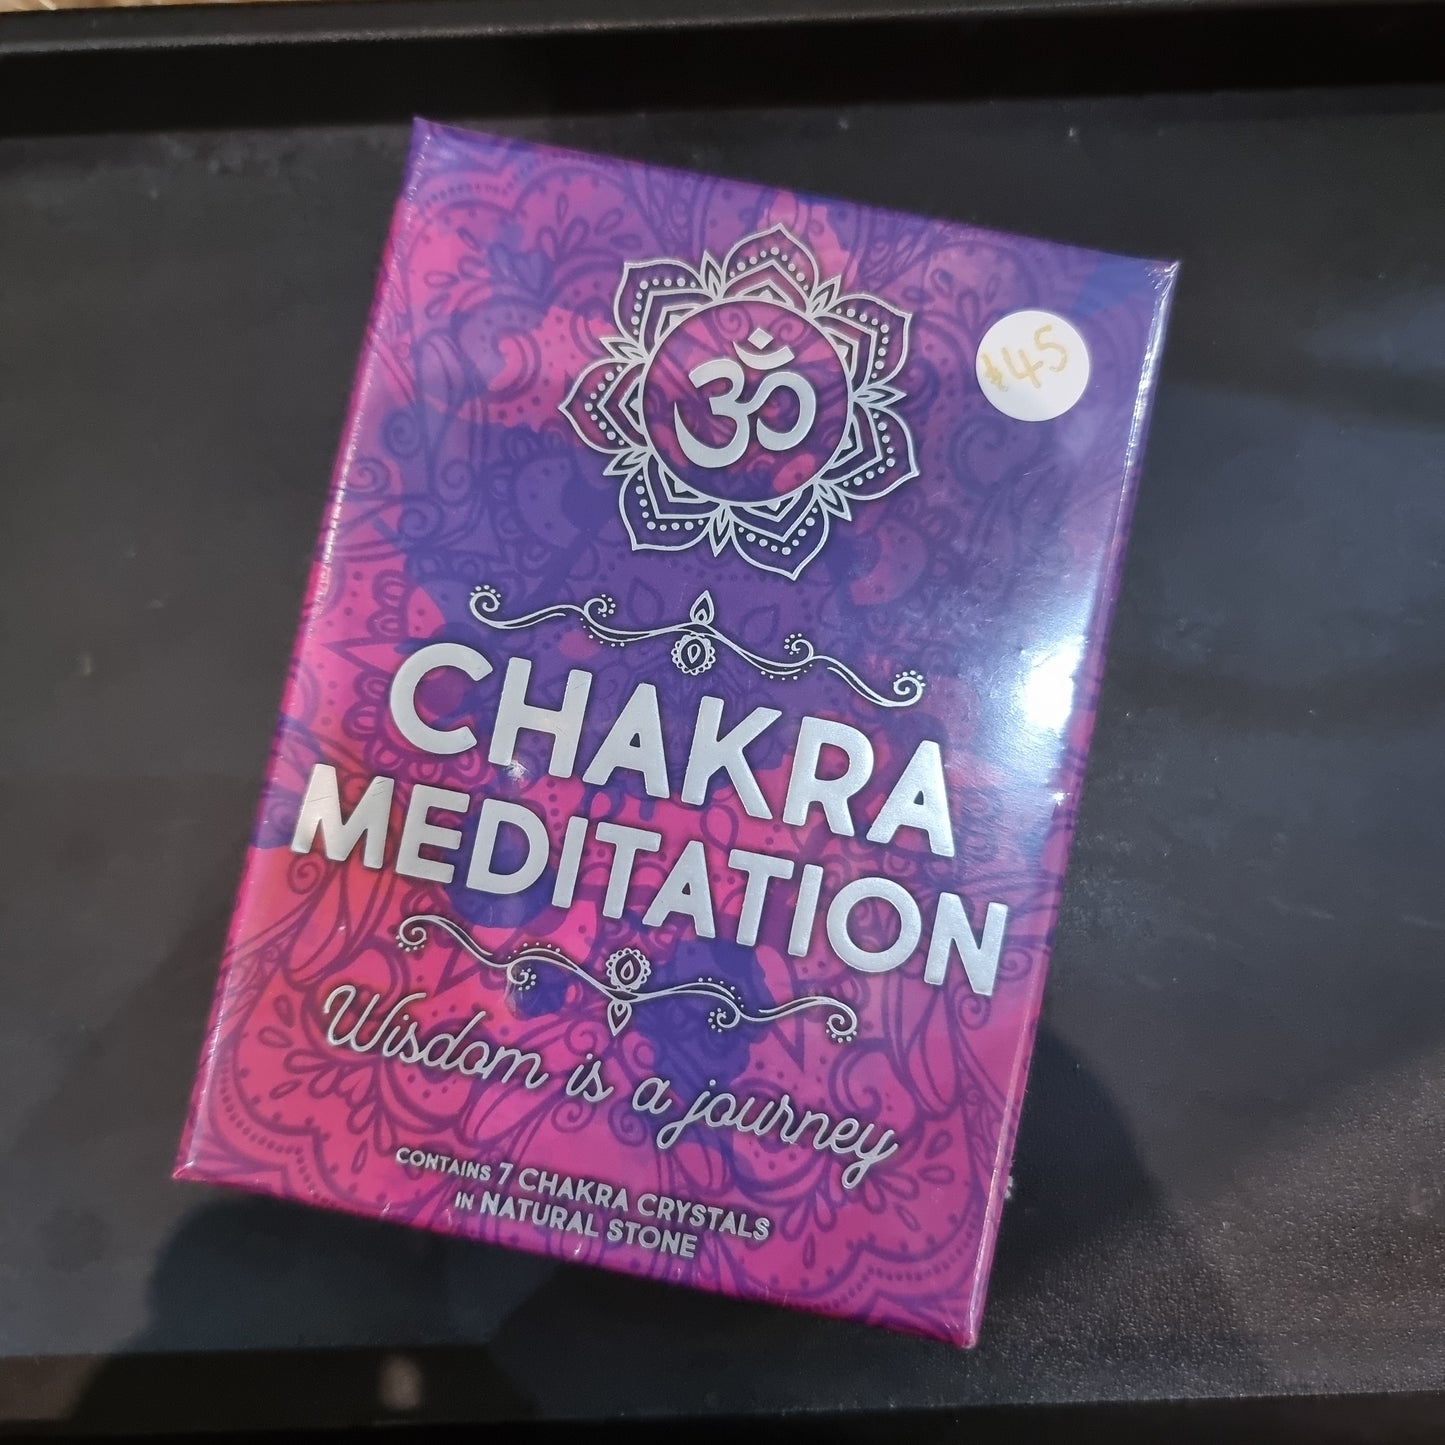 Chakra meditation - Rivendell Shop